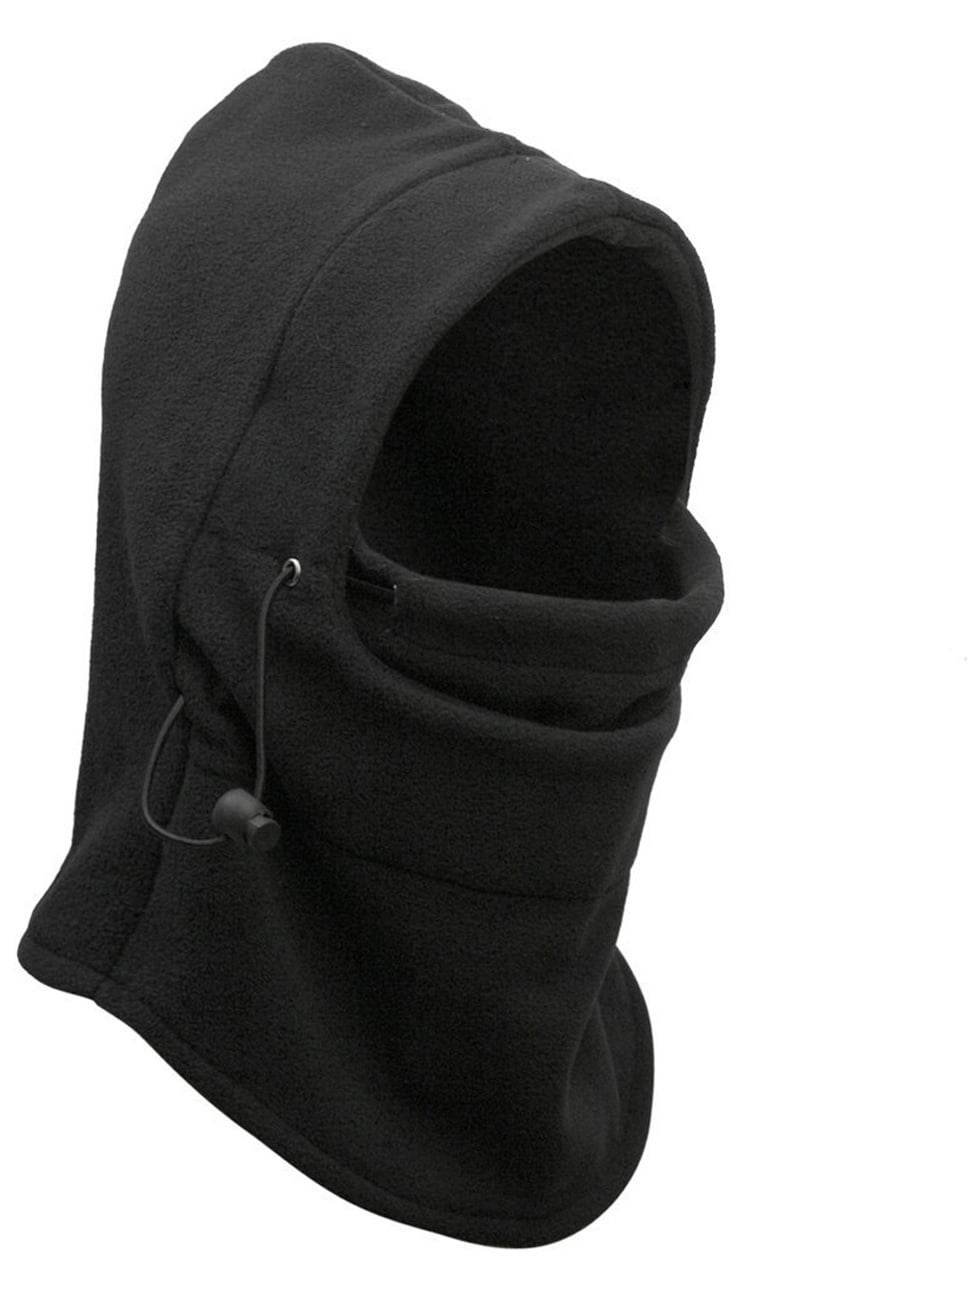 Winter Full Face Neck Mask Cover Hat Camo Hunting Ski Thermal Fleece Balaclava 